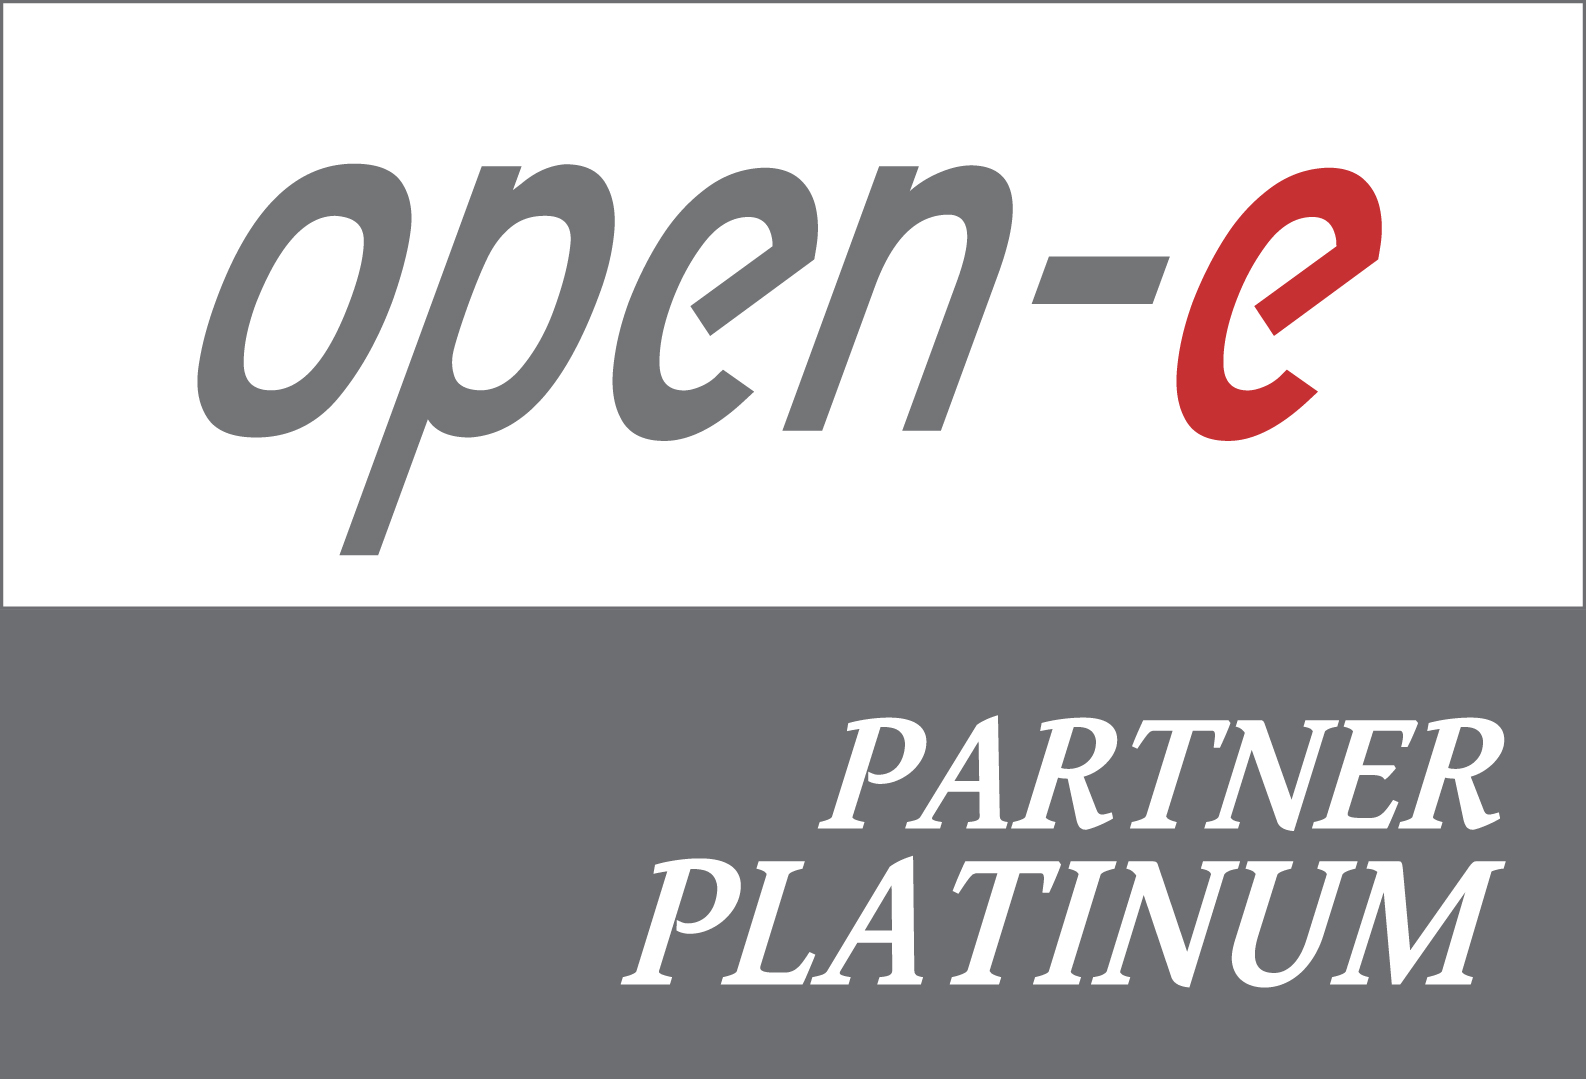 Open-E Platinum Partner